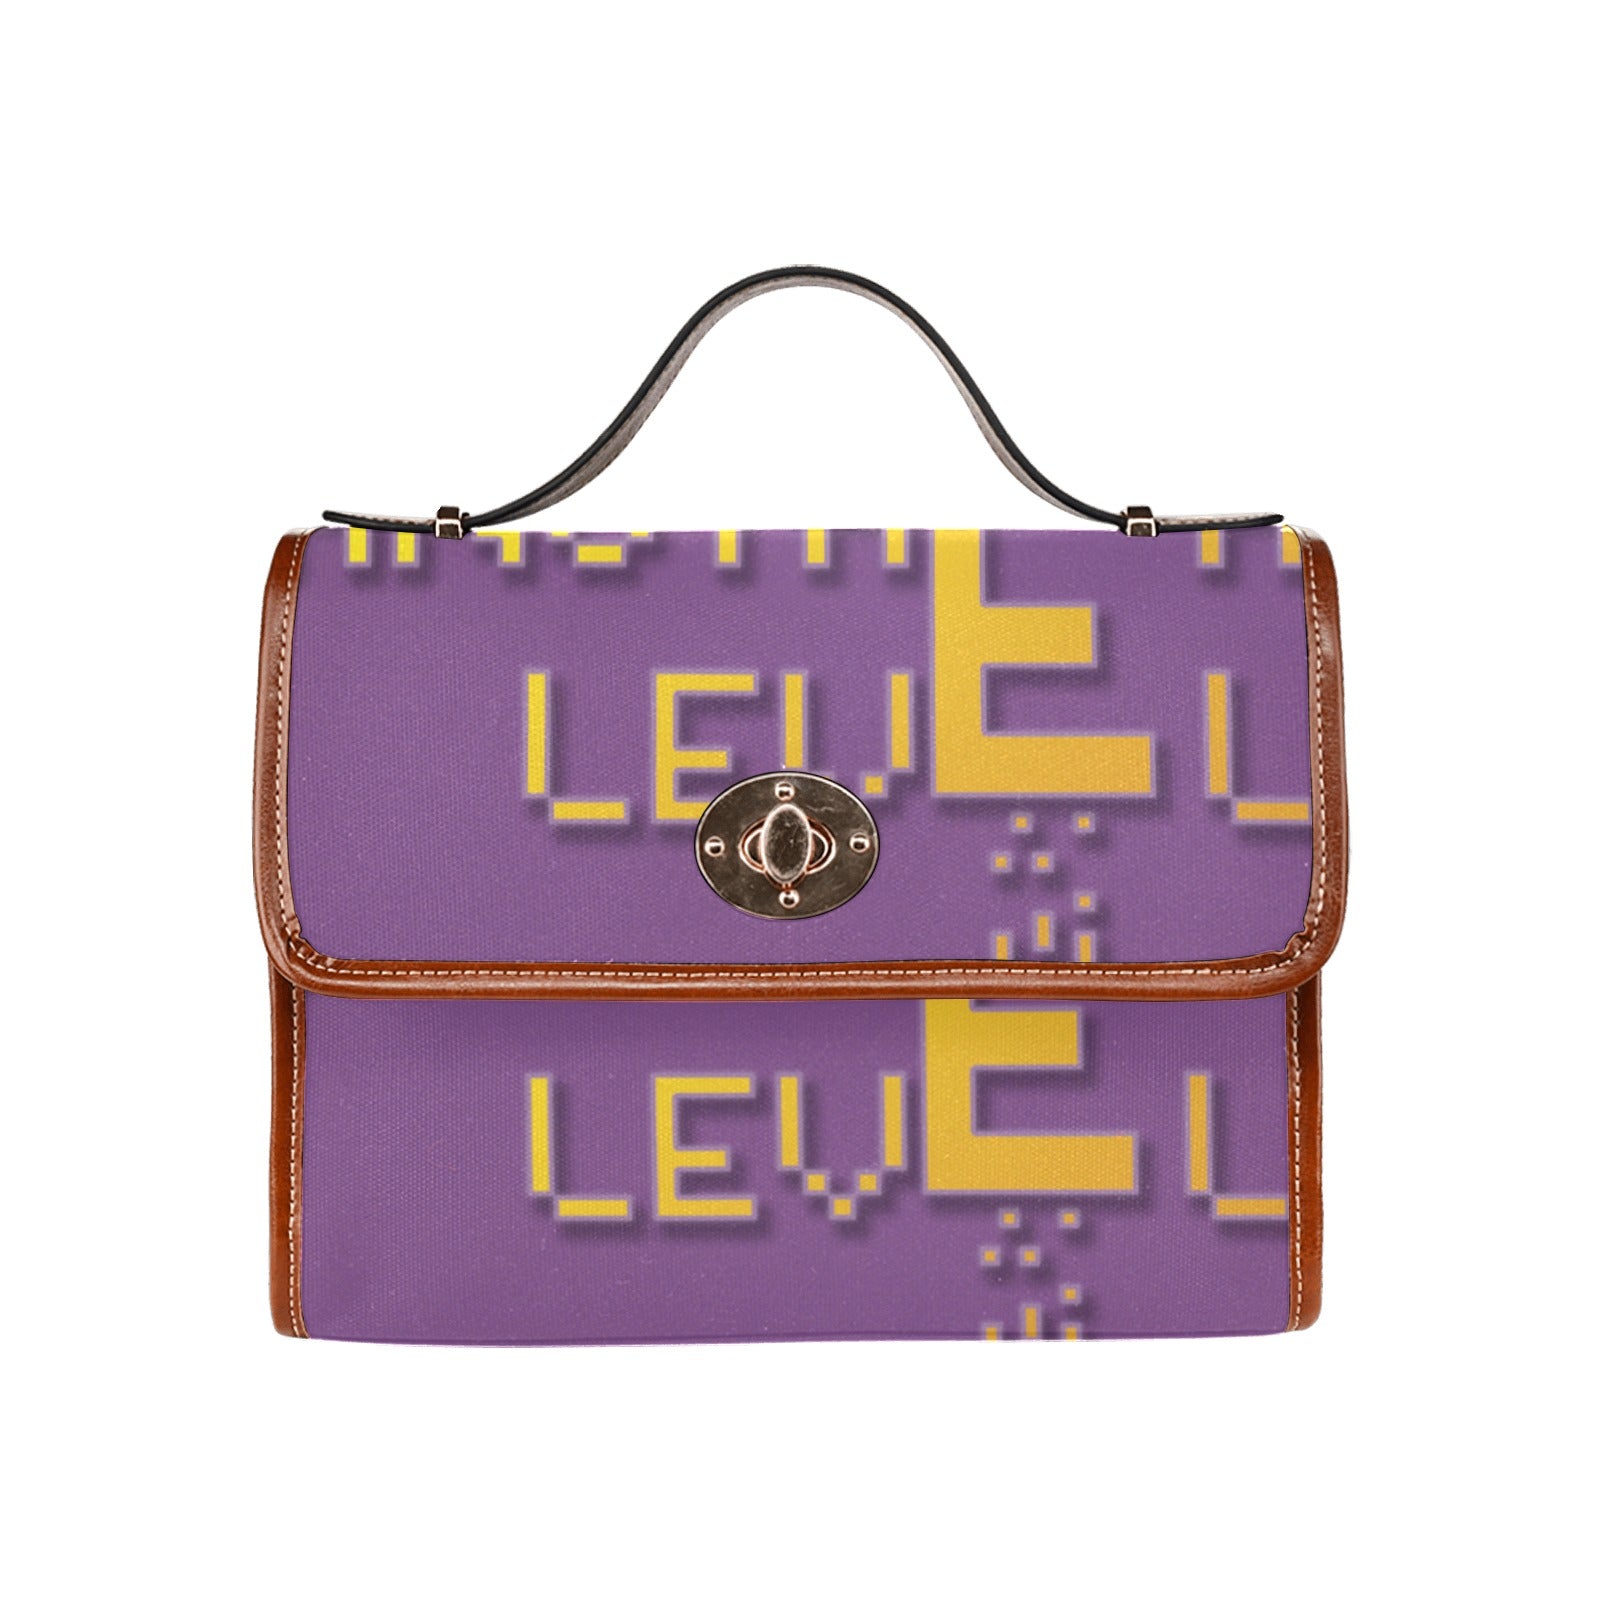 fz yellow levels handbag one size / fz - levels bag-purple all over print waterproof canvas bag(model1641)(brown strap)